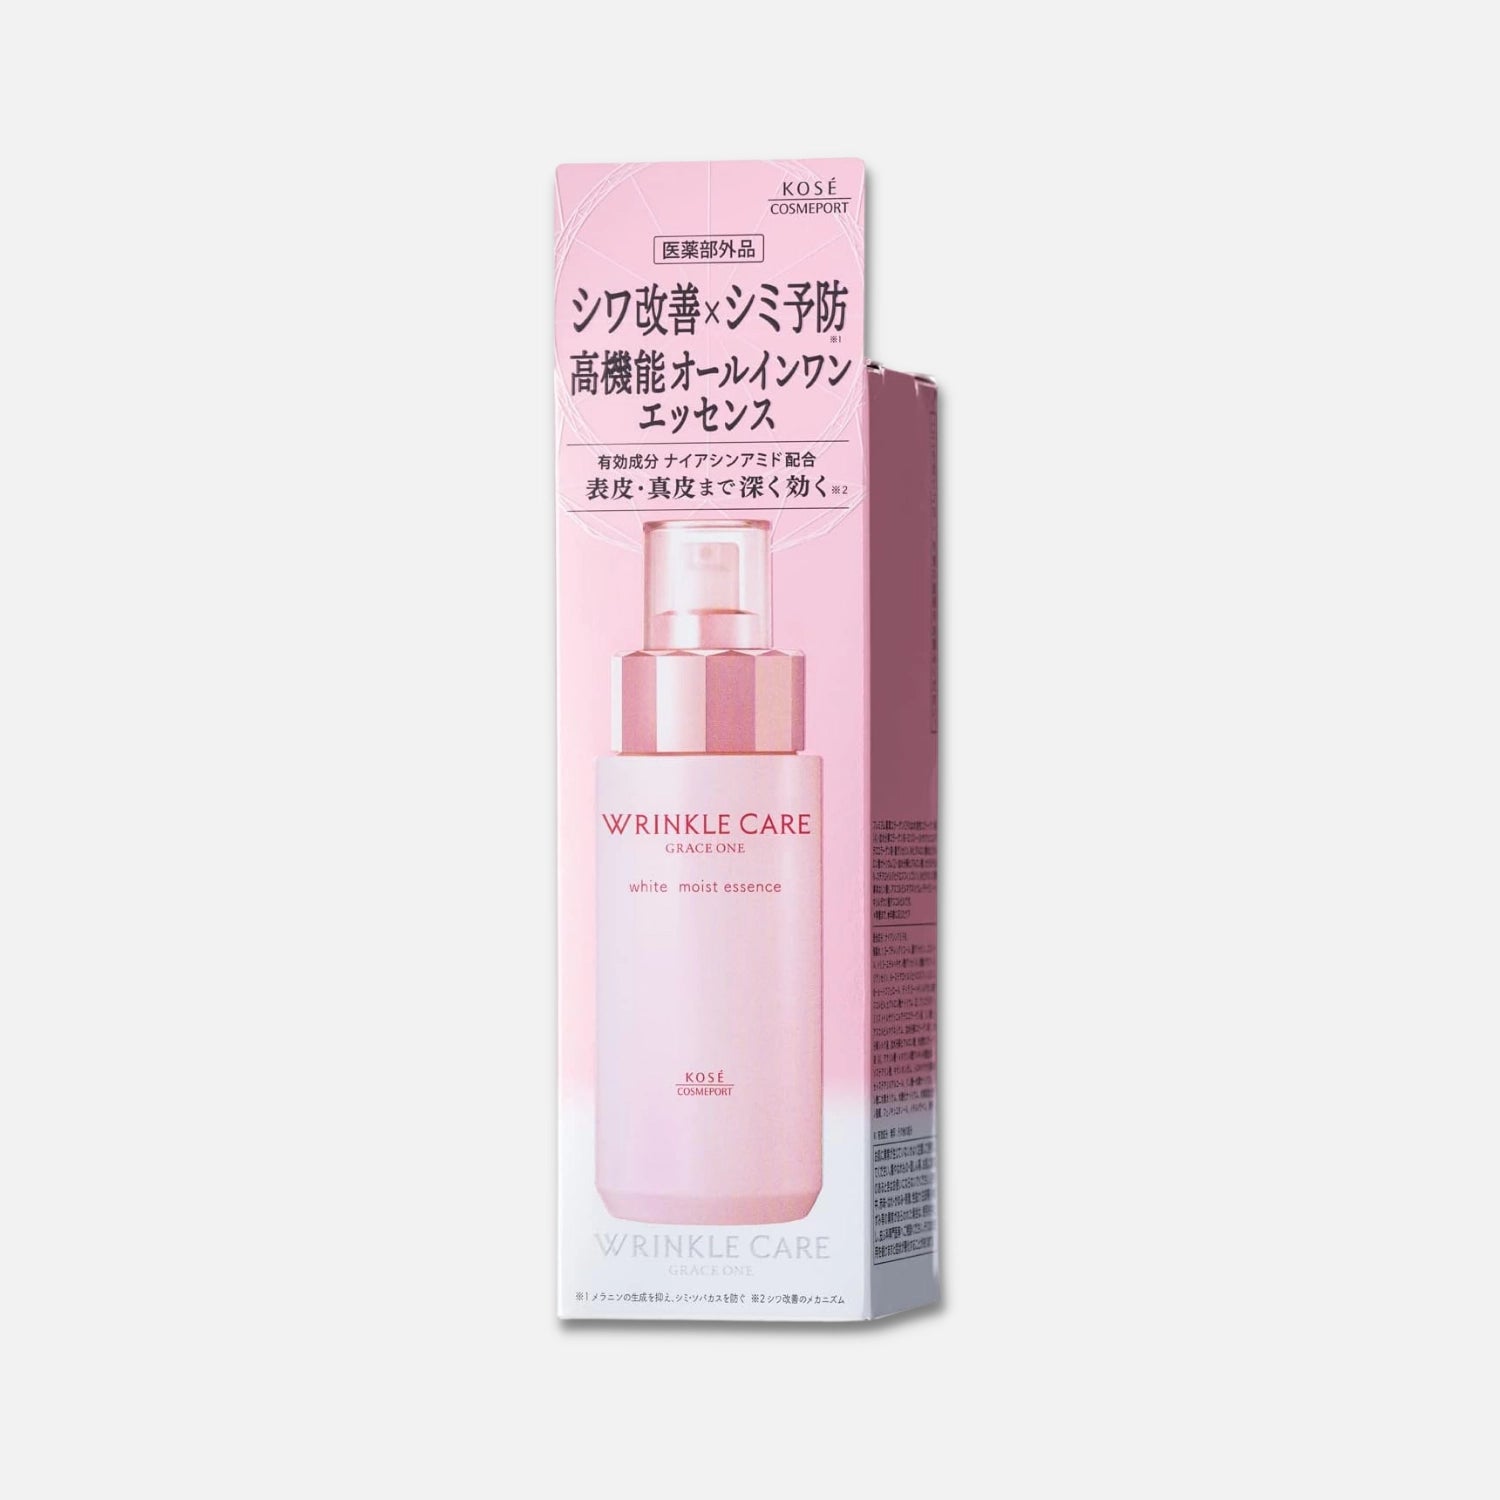 Kose Wrinkle Care White Moist Essence 180ml - Buy Me Japan